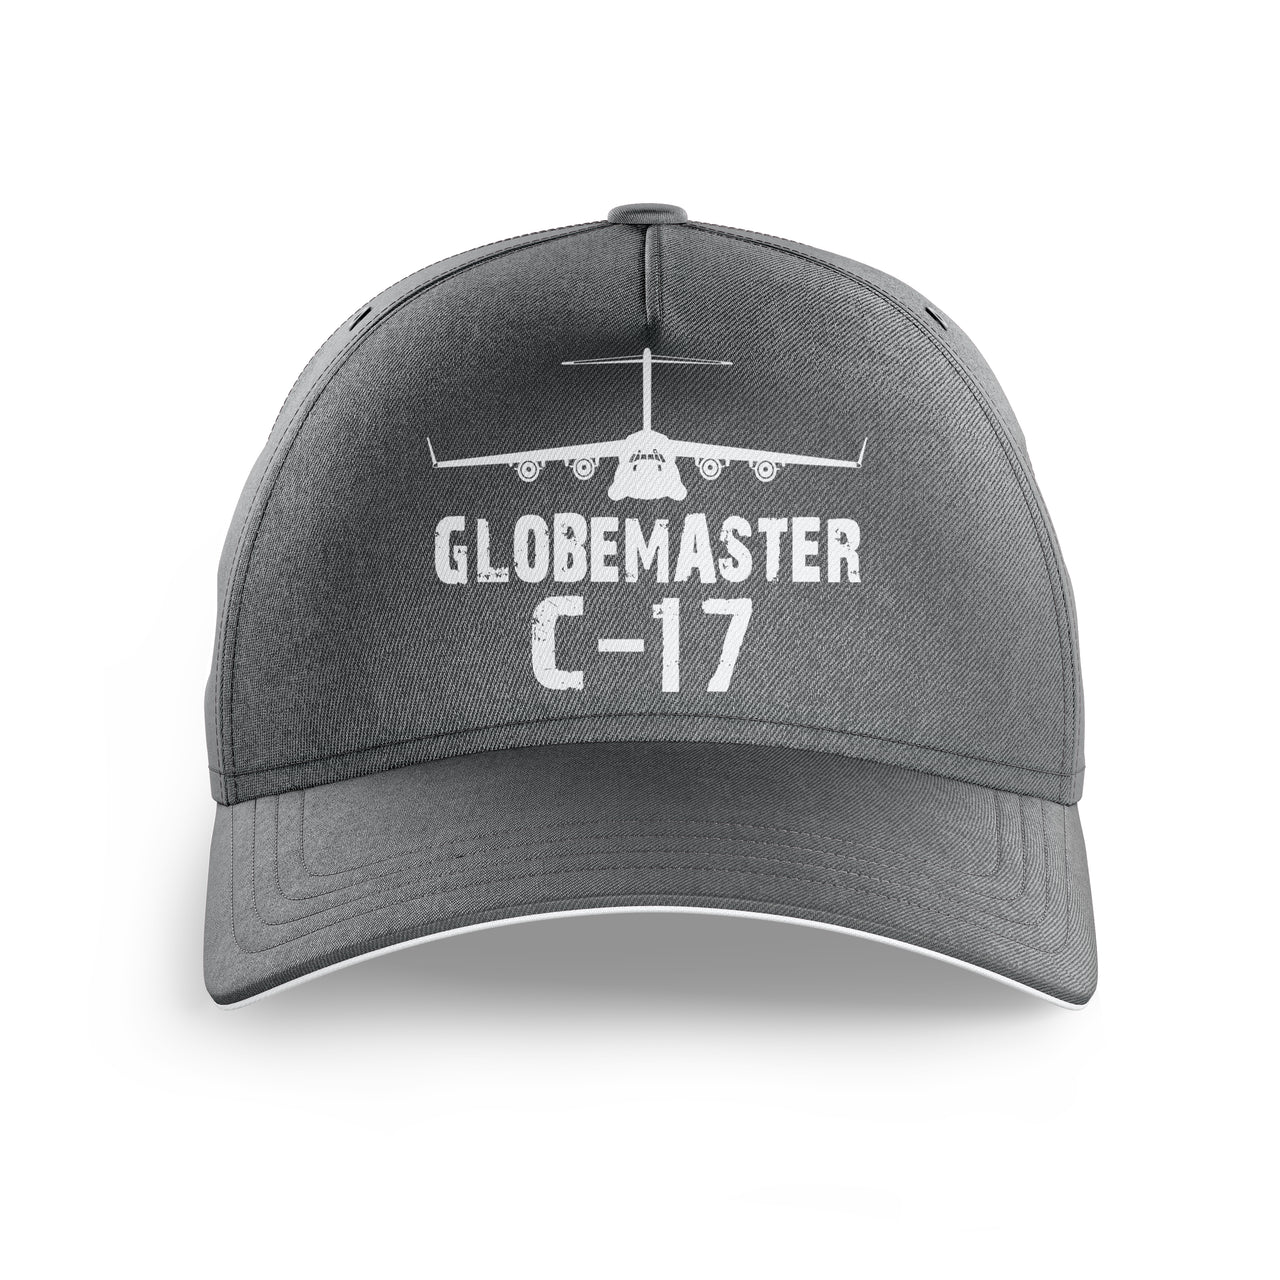 GlobeMaster C-17 & Plane Printed Hats